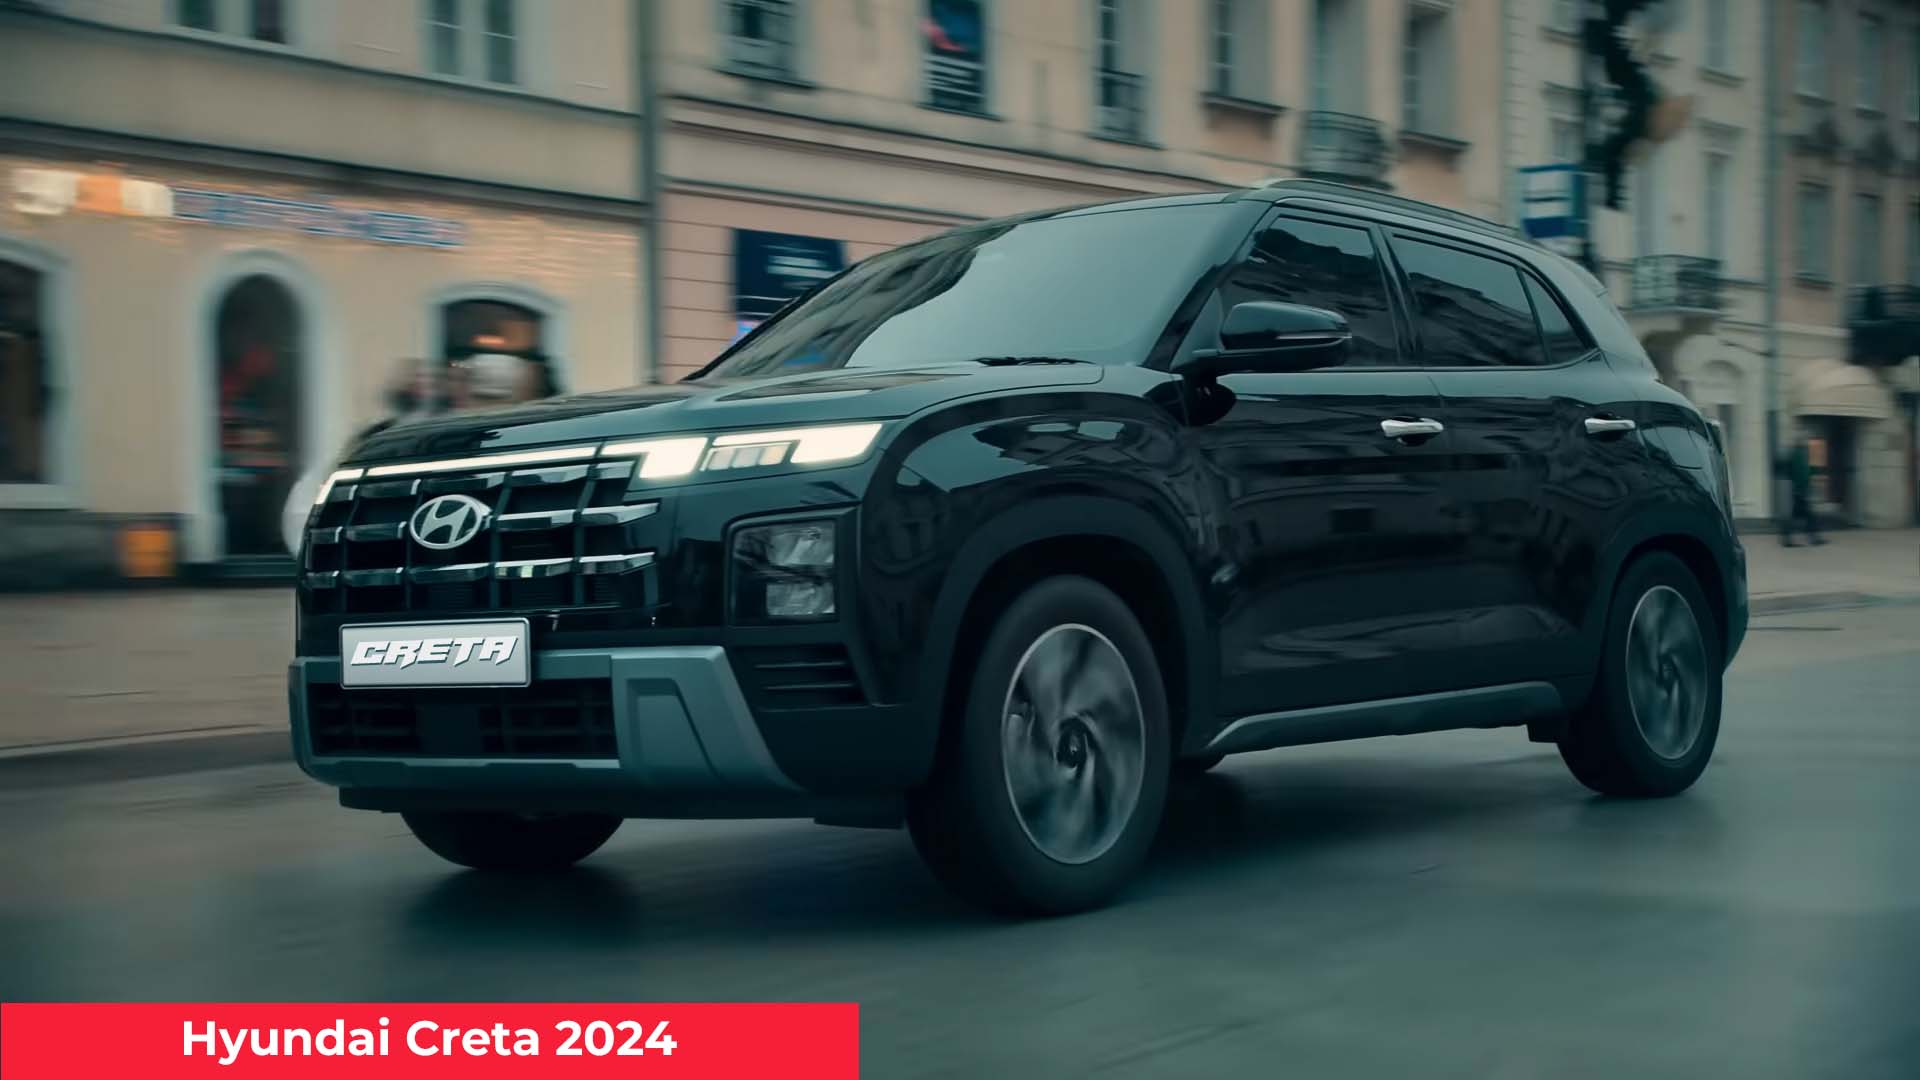 Check out the 2024 Hyundai Creta